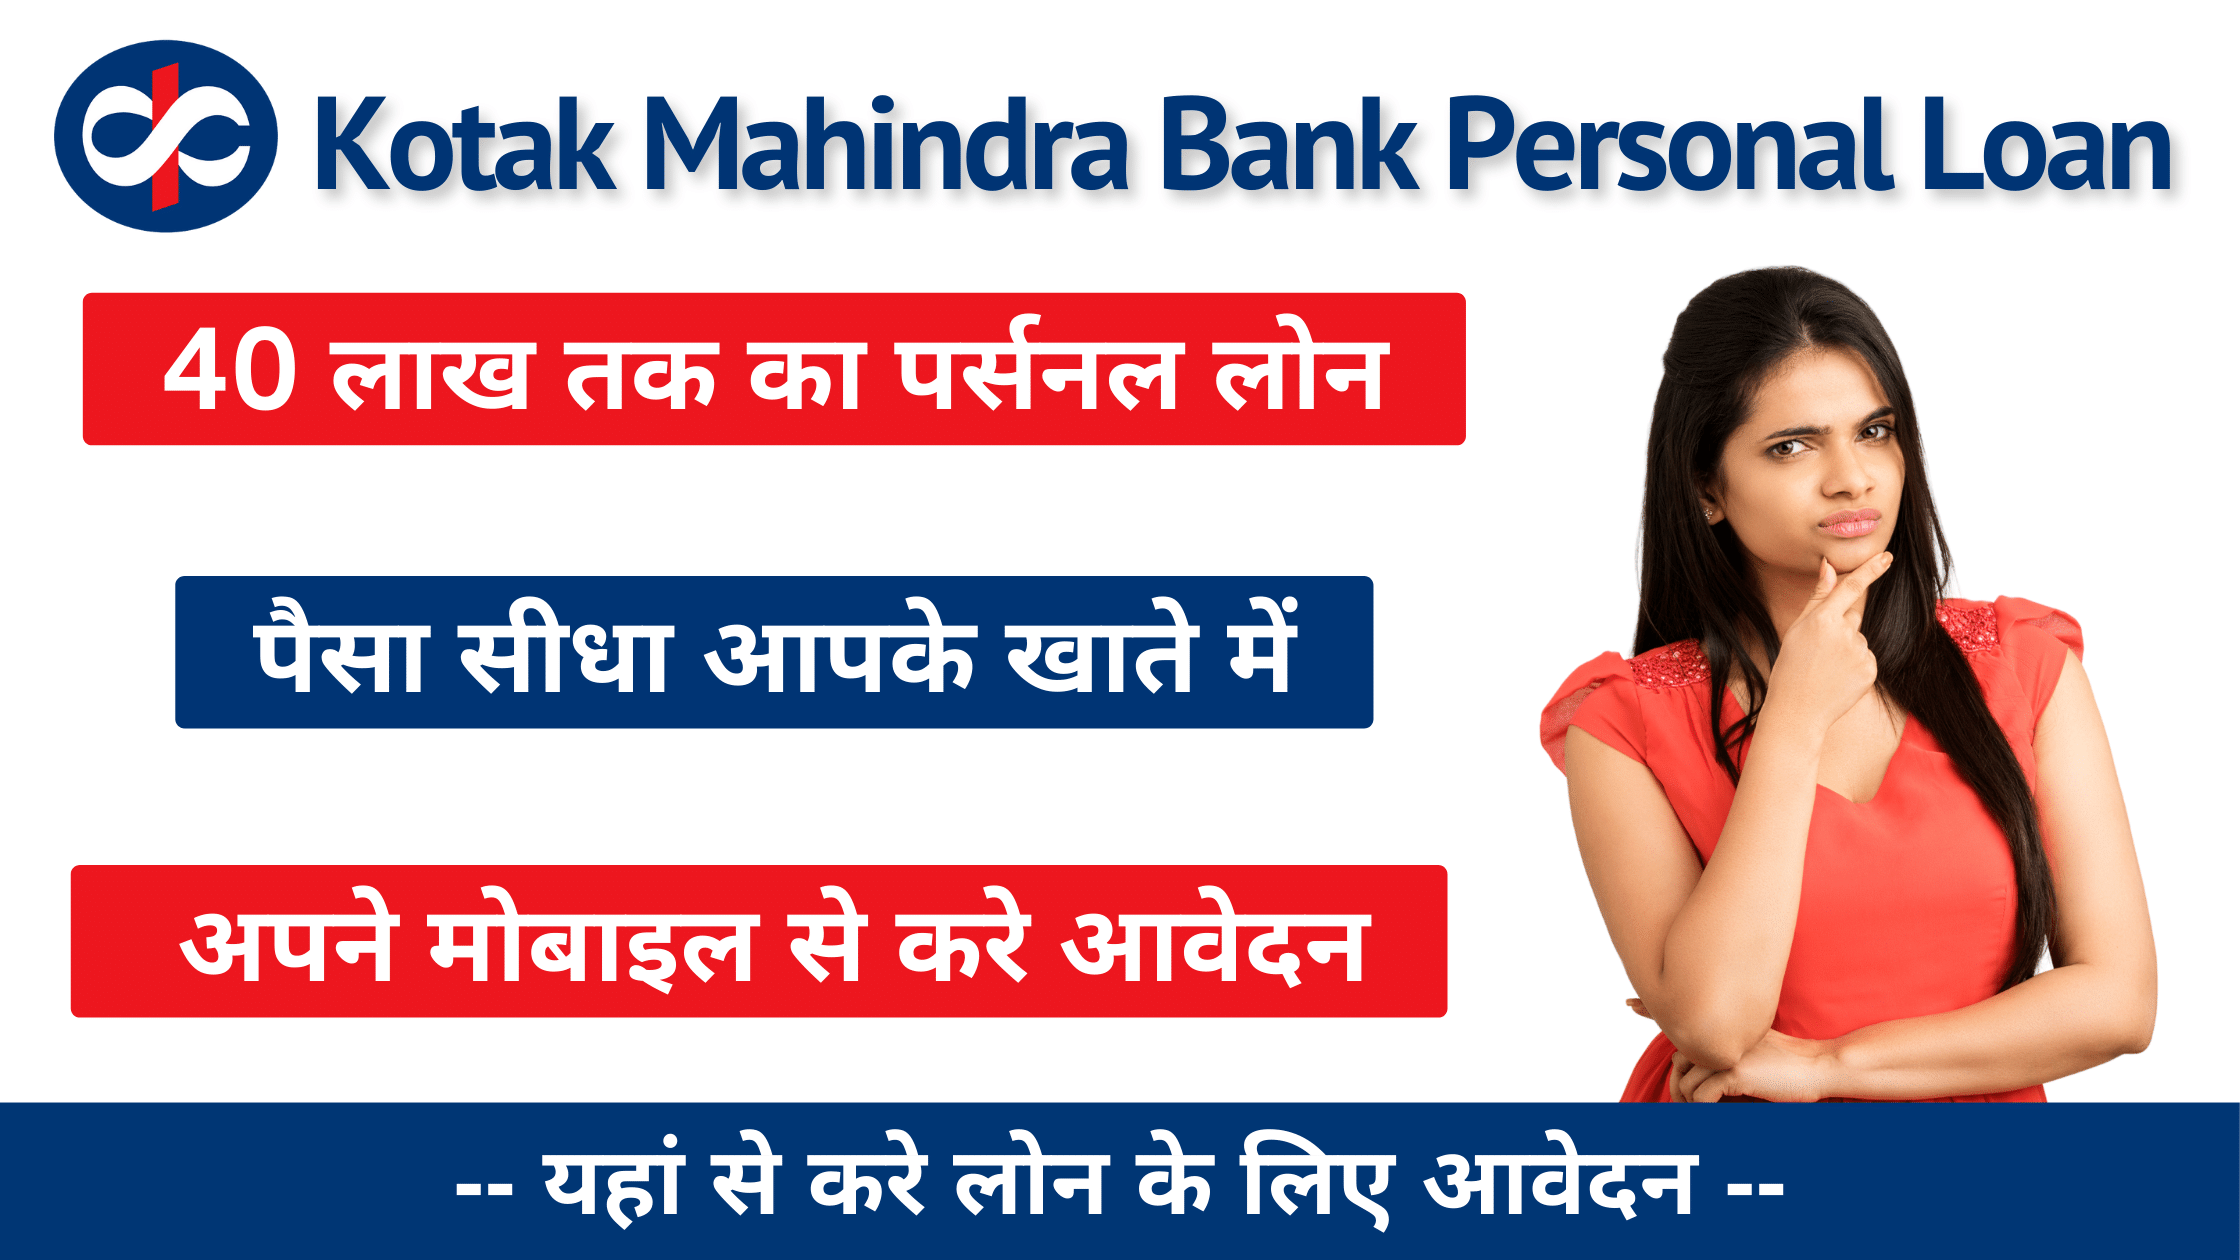 Kotak Mahindra Bank Personal Loan new